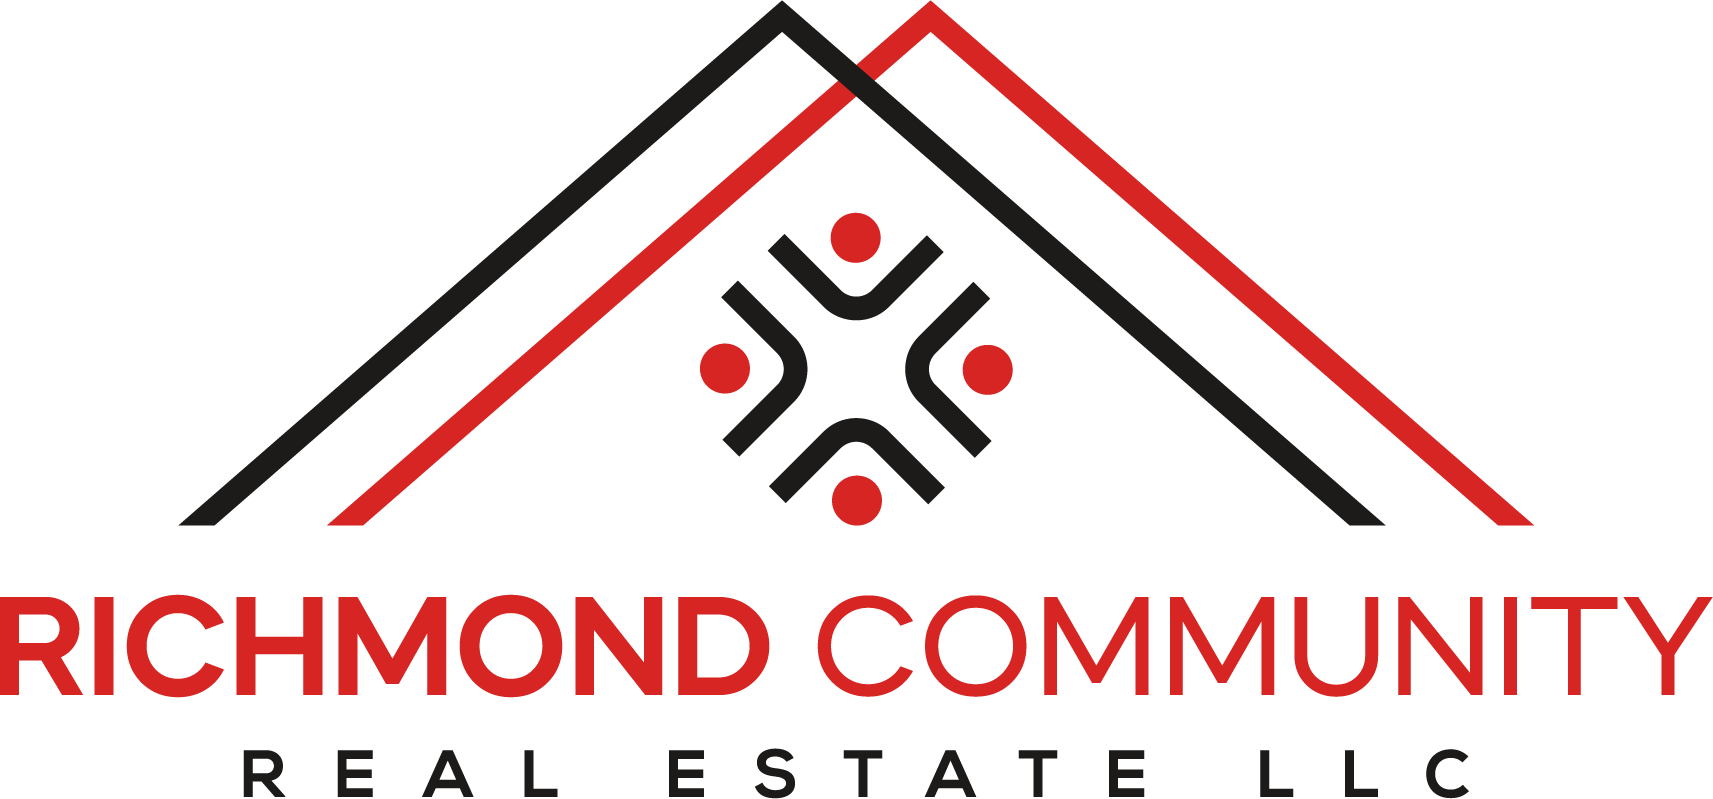 Richmond Community Real Estate